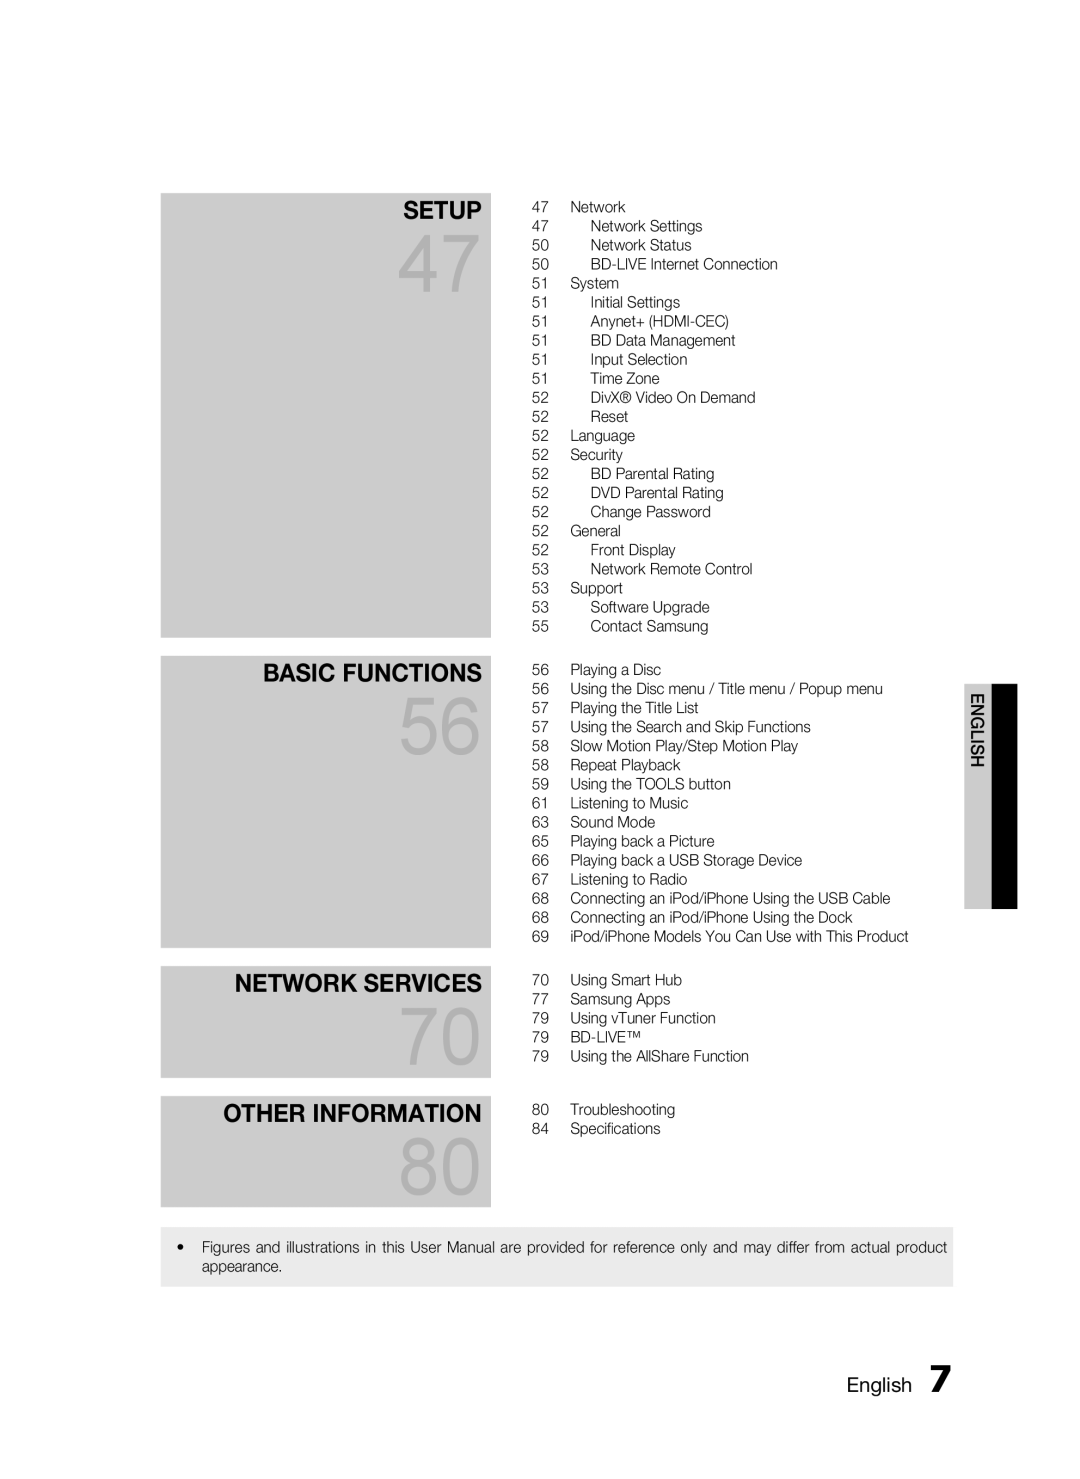 Samsung HW-D7000 user manual Basic Functions, Network Services, Other Information, Setup 